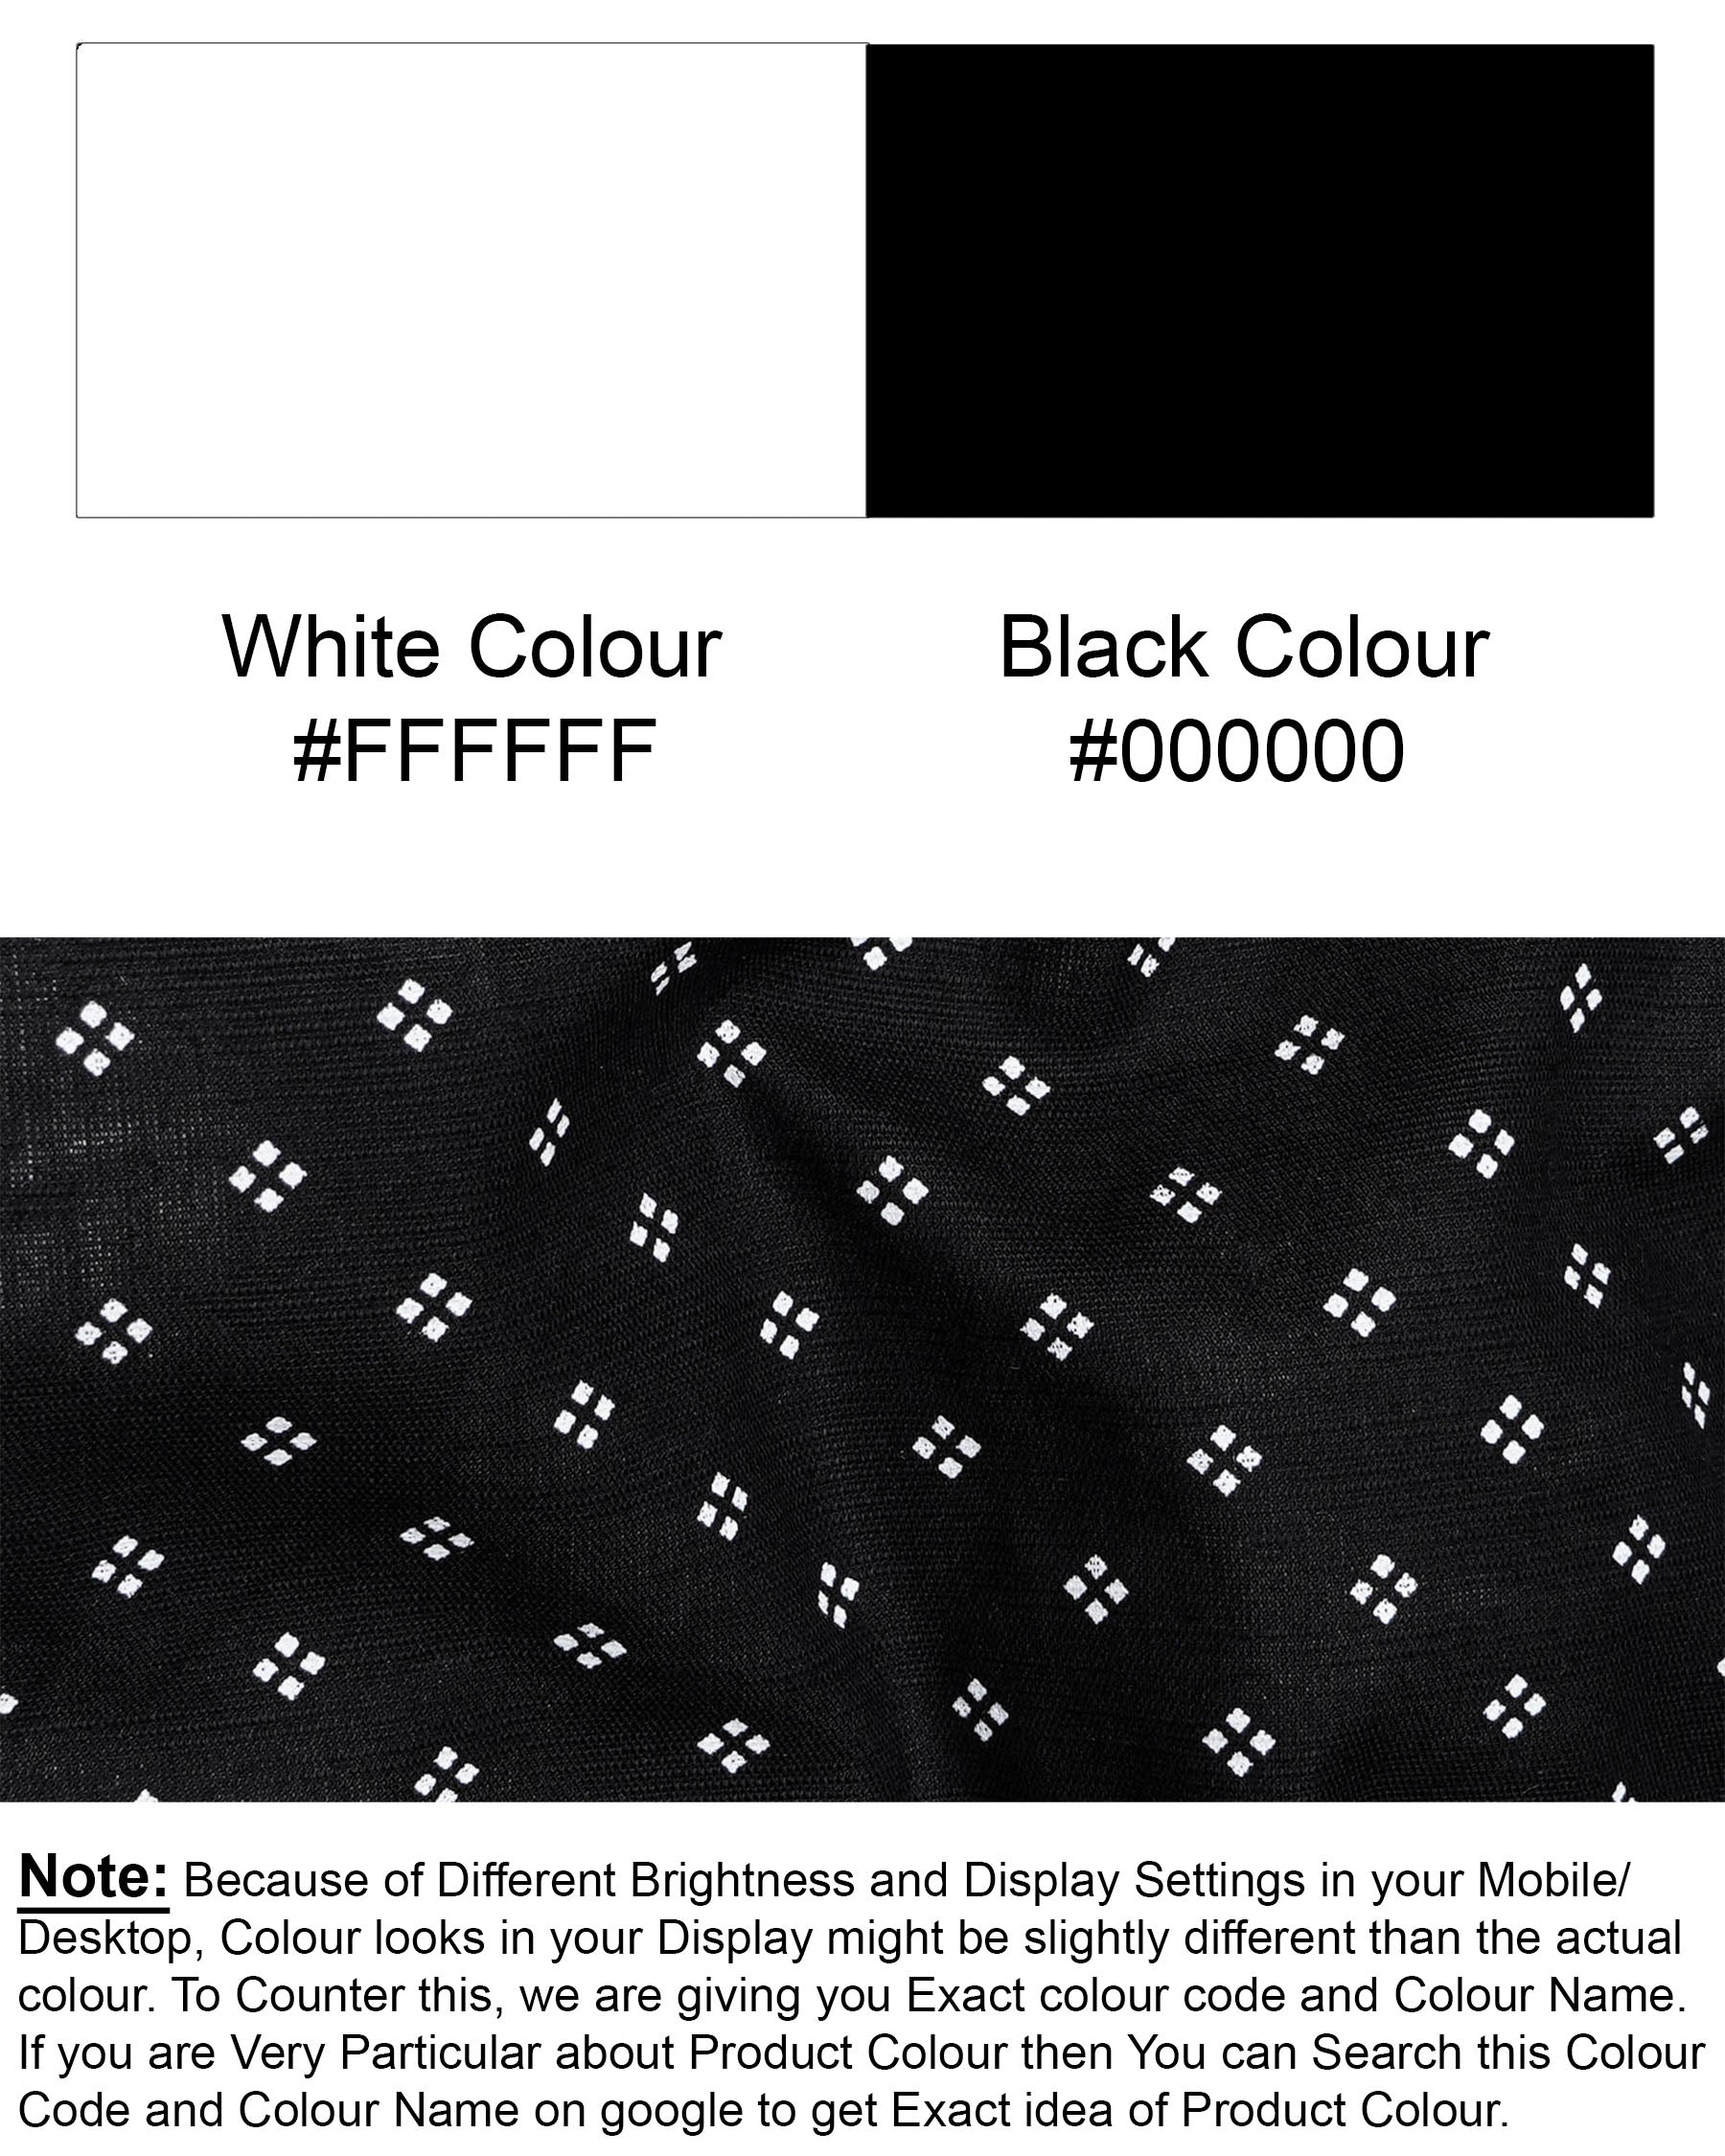 Jade Black and White Luxurious Linen Shirt 7550-M-BLK-38,7550-M-BLK-38,7550-M-BLK-39,7550-M-BLK-39,7550-M-BLK-40,7550-M-BLK-40,7550-M-BLK-42,7550-M-BLK-42,7550-M-BLK-44,7550-M-BLK-44,7550-M-BLK-46,7550-M-BLK-46,7550-M-BLK-48,7550-M-BLK-48,7550-M-BLK-50,7550-M-BLK-50,7550-M-BLK-52,7550-M-BLK-52